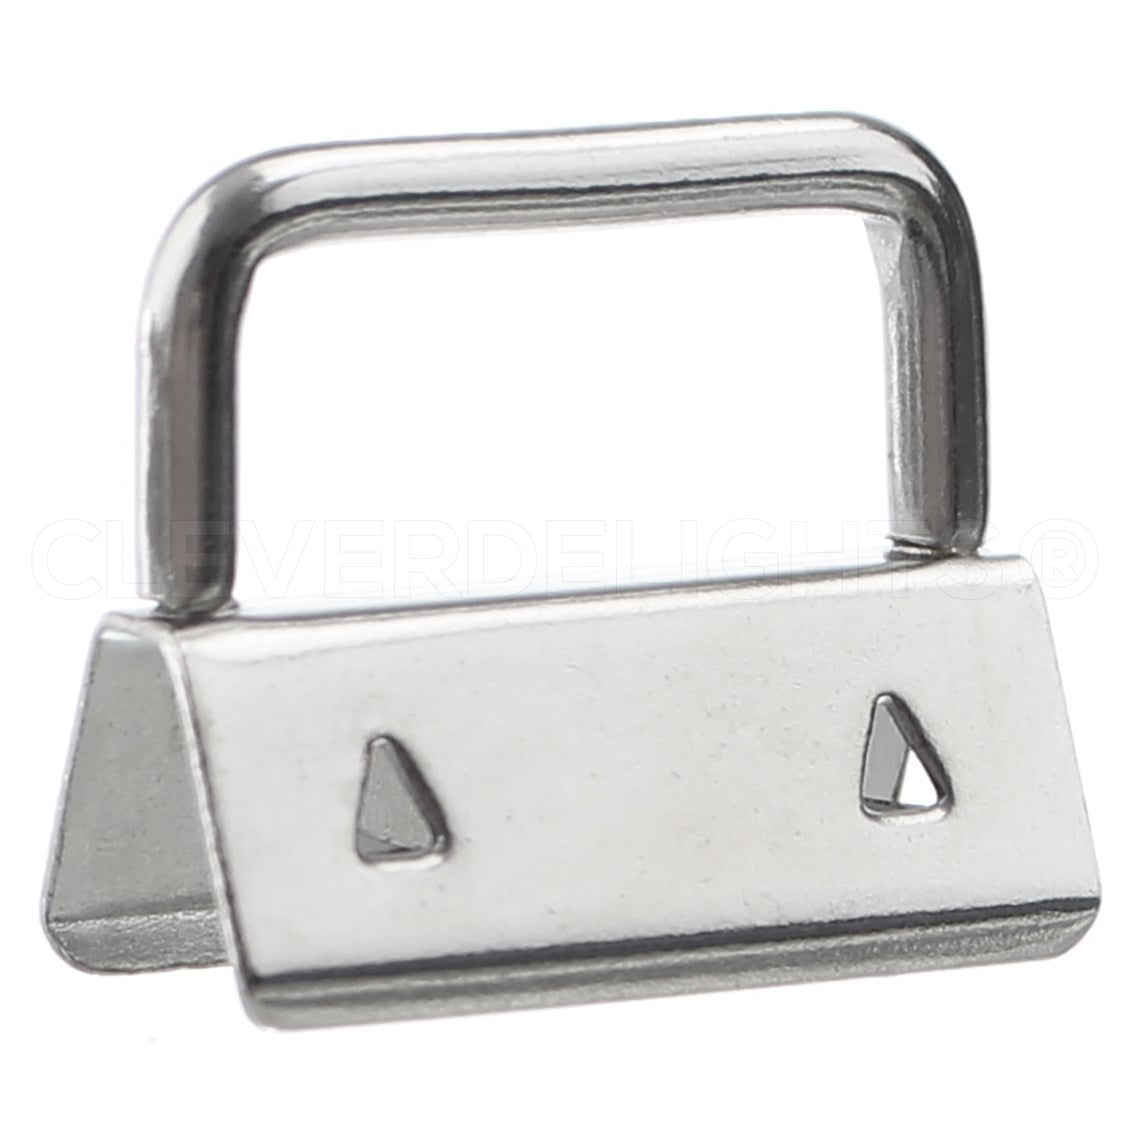 Laniakea 100pcs 1 inch Key Fob Hardware with Key Rings, Silver Wristlet Key Fob for Keychains Making, Key Lanyard Install